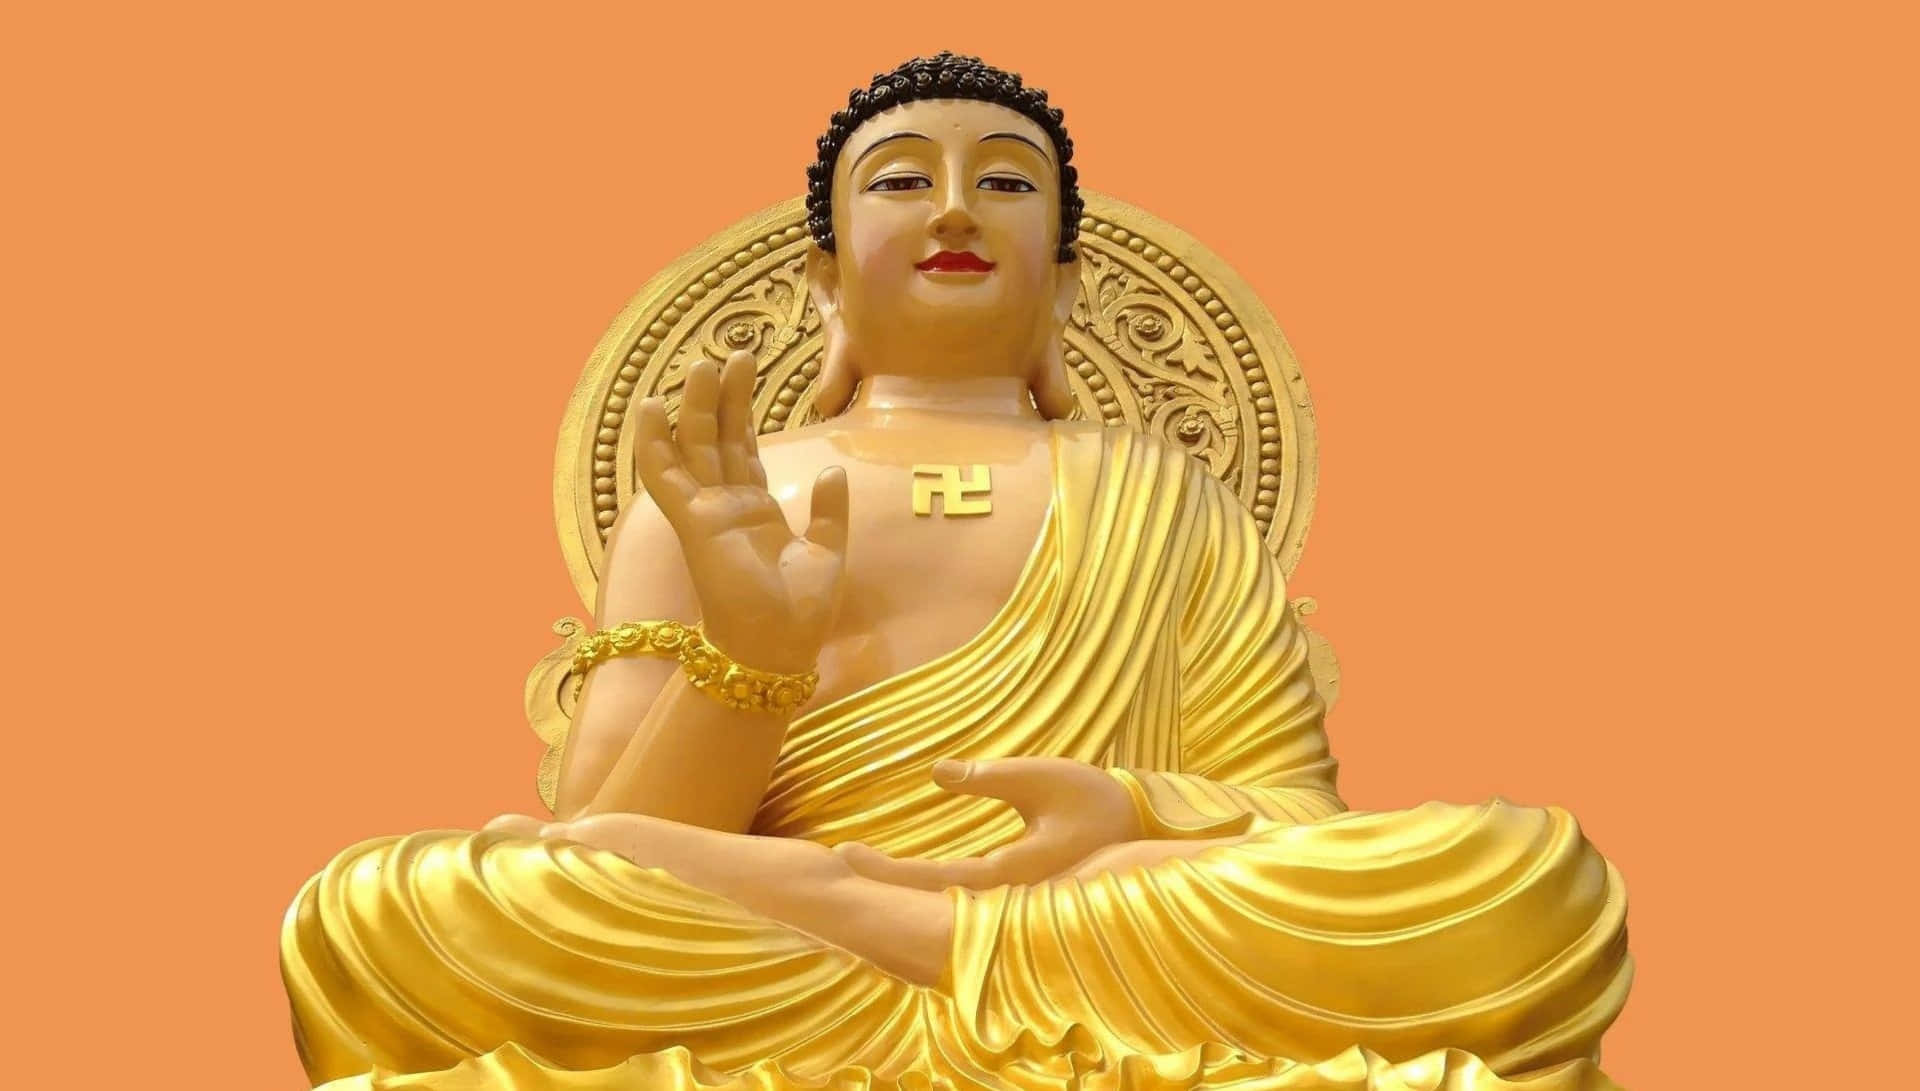 A Gold Buddha Statue Sitting On An Orange Background